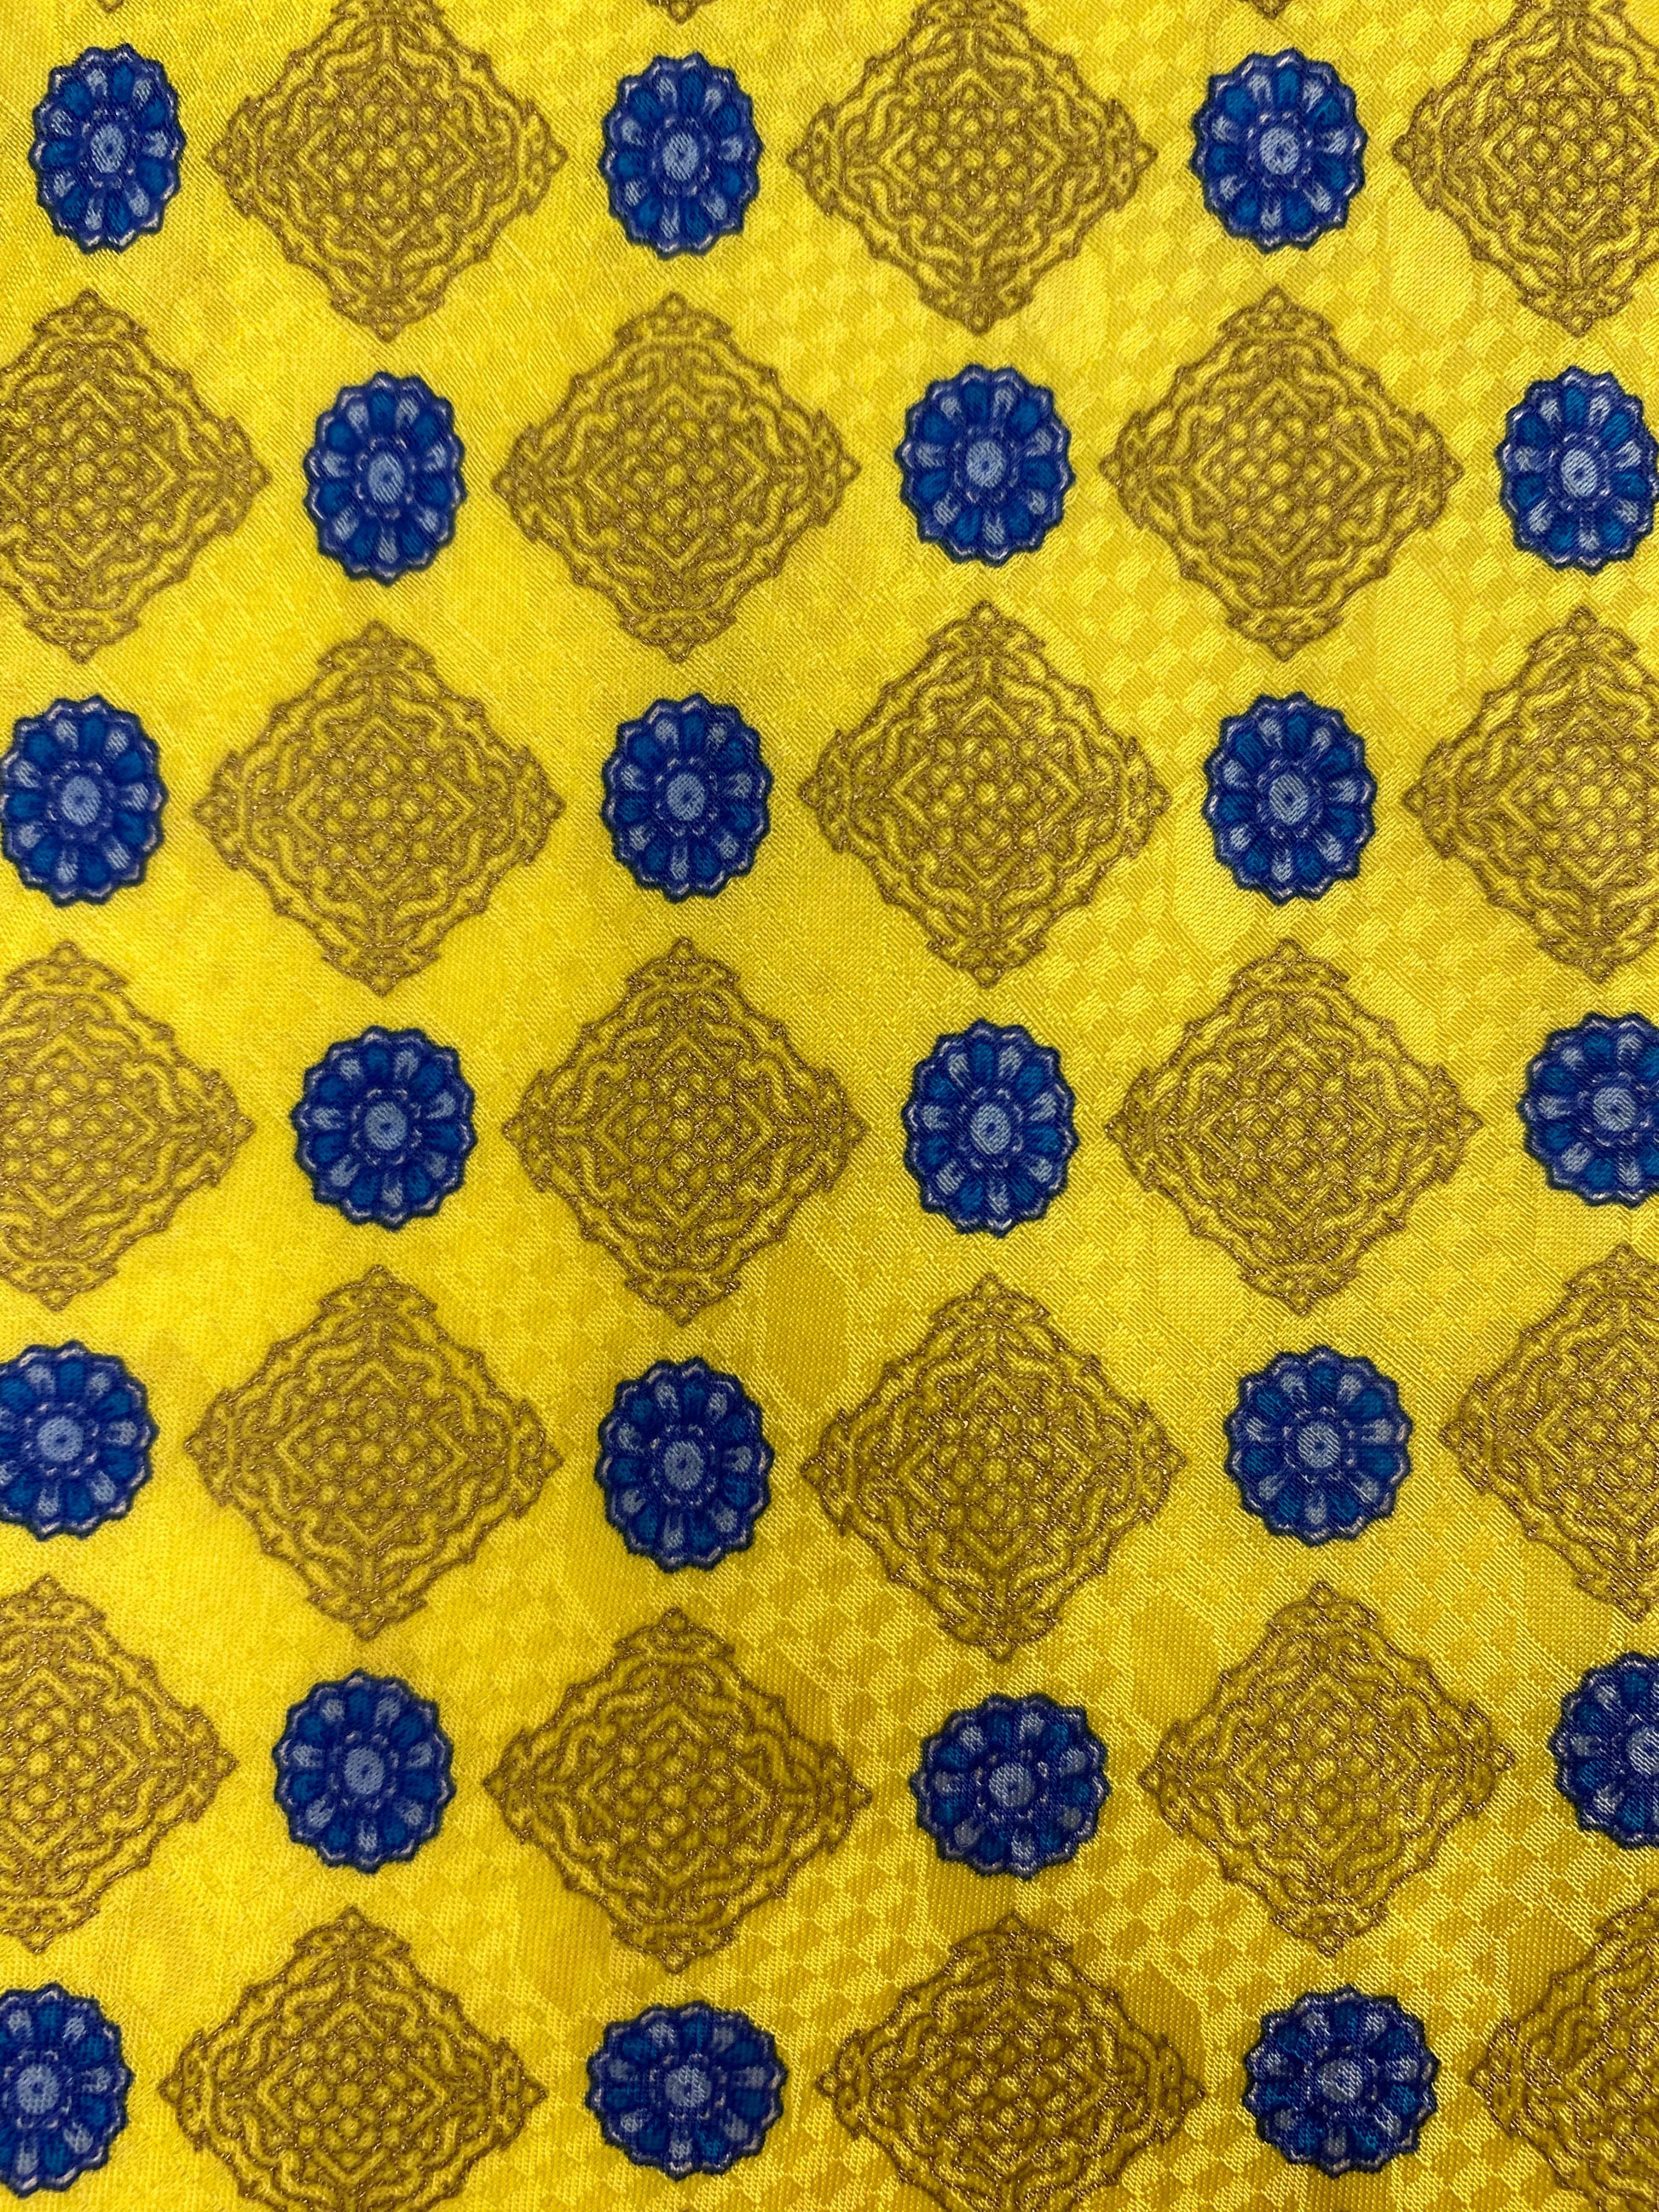 Close-up pattern detail of: 90s Deadstock Silk Necktie, Men's Vintage Yellow/Gold/Blue Medallion Pattern Tie, NOS